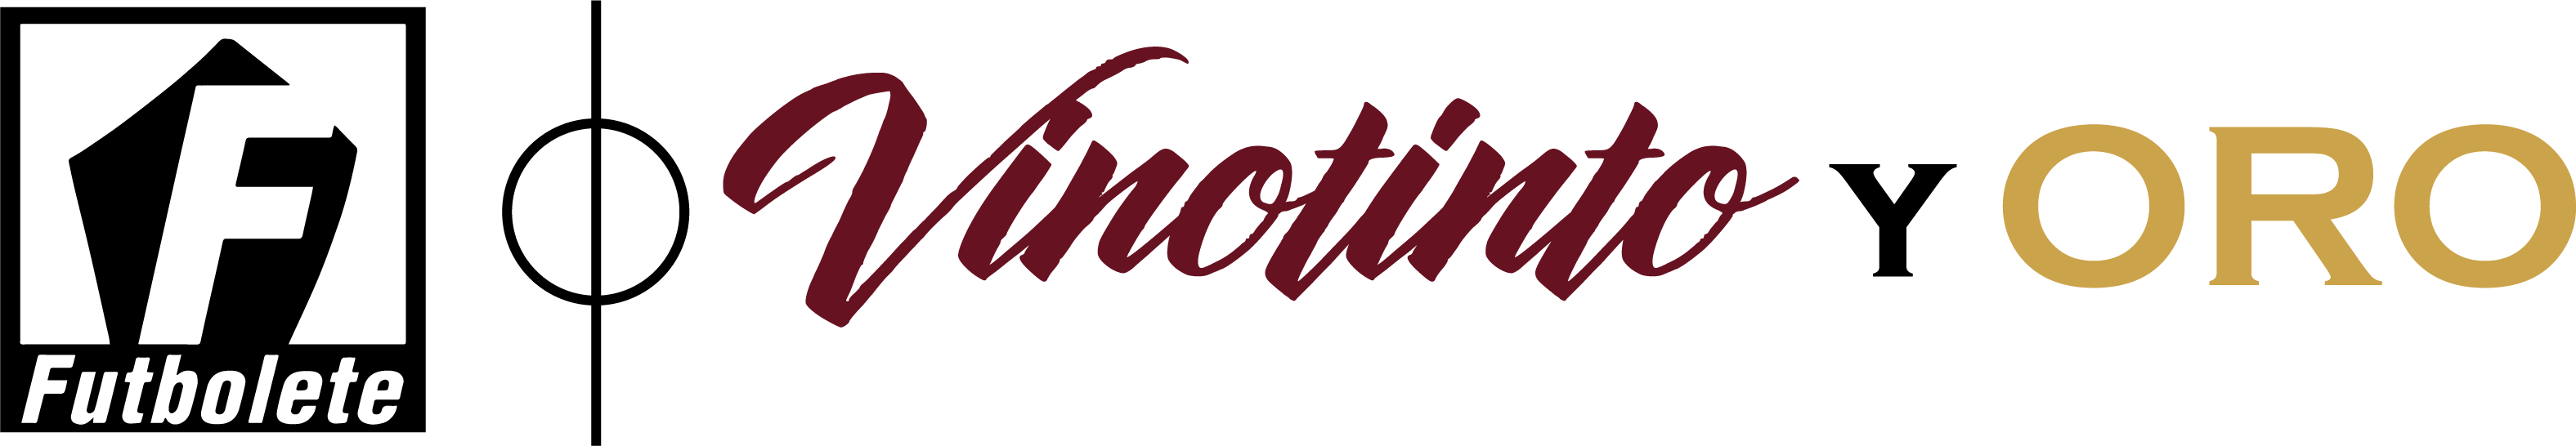 Logo Vinotinto y Oro